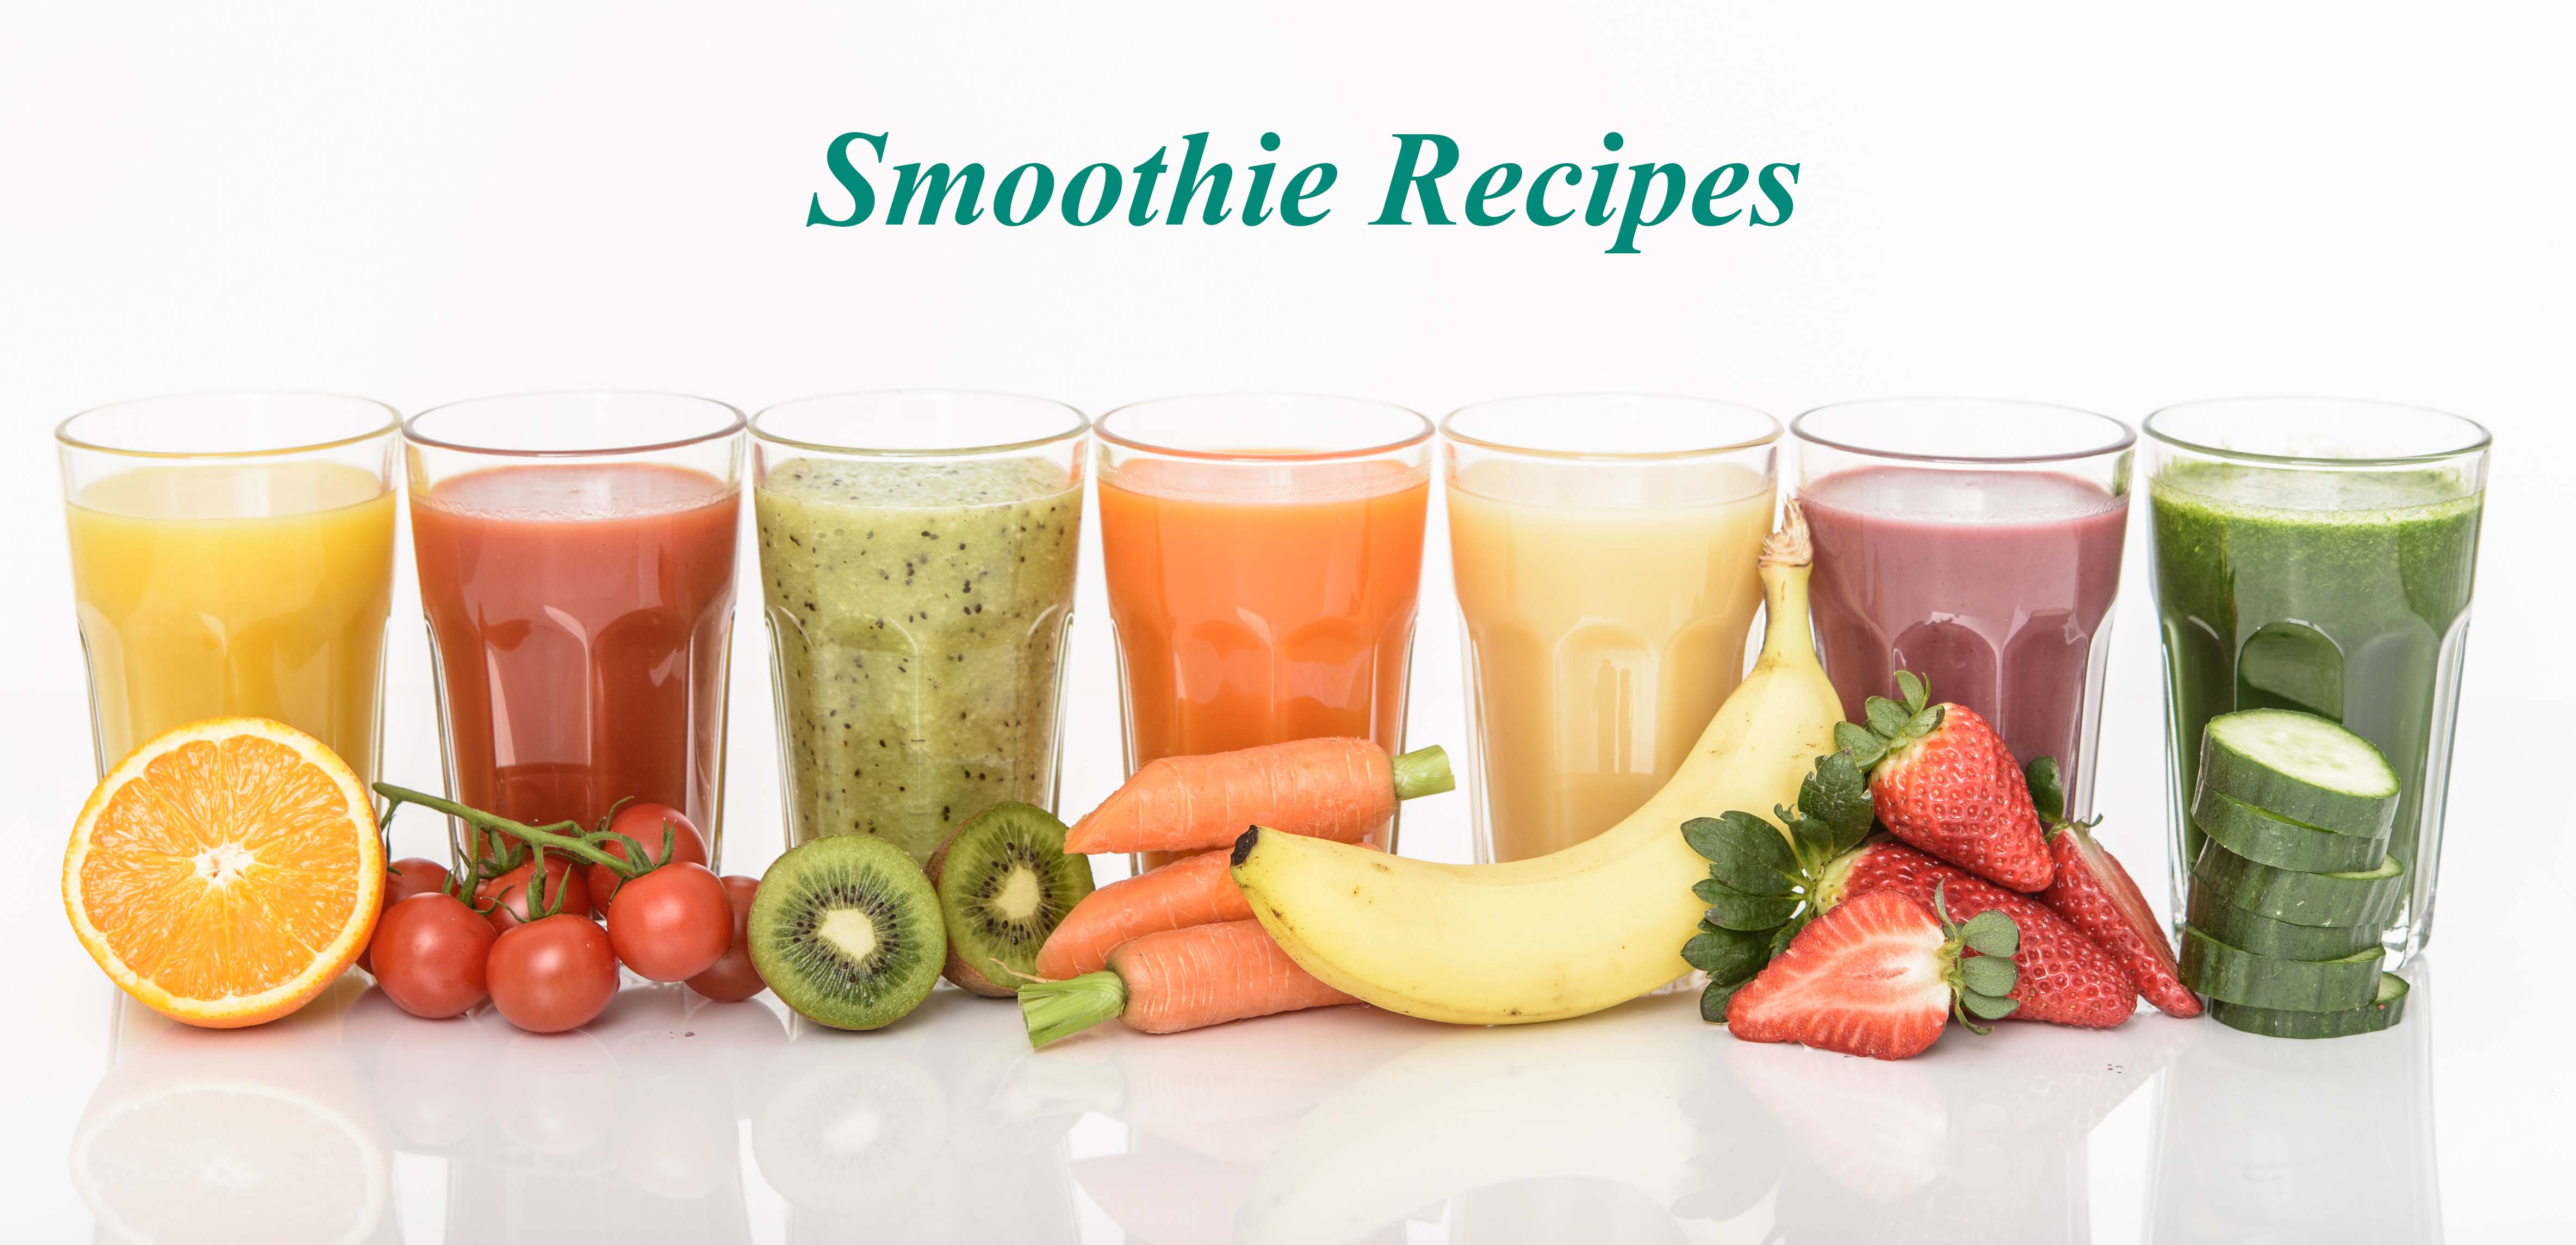 smoothie-recipes-image.jpg